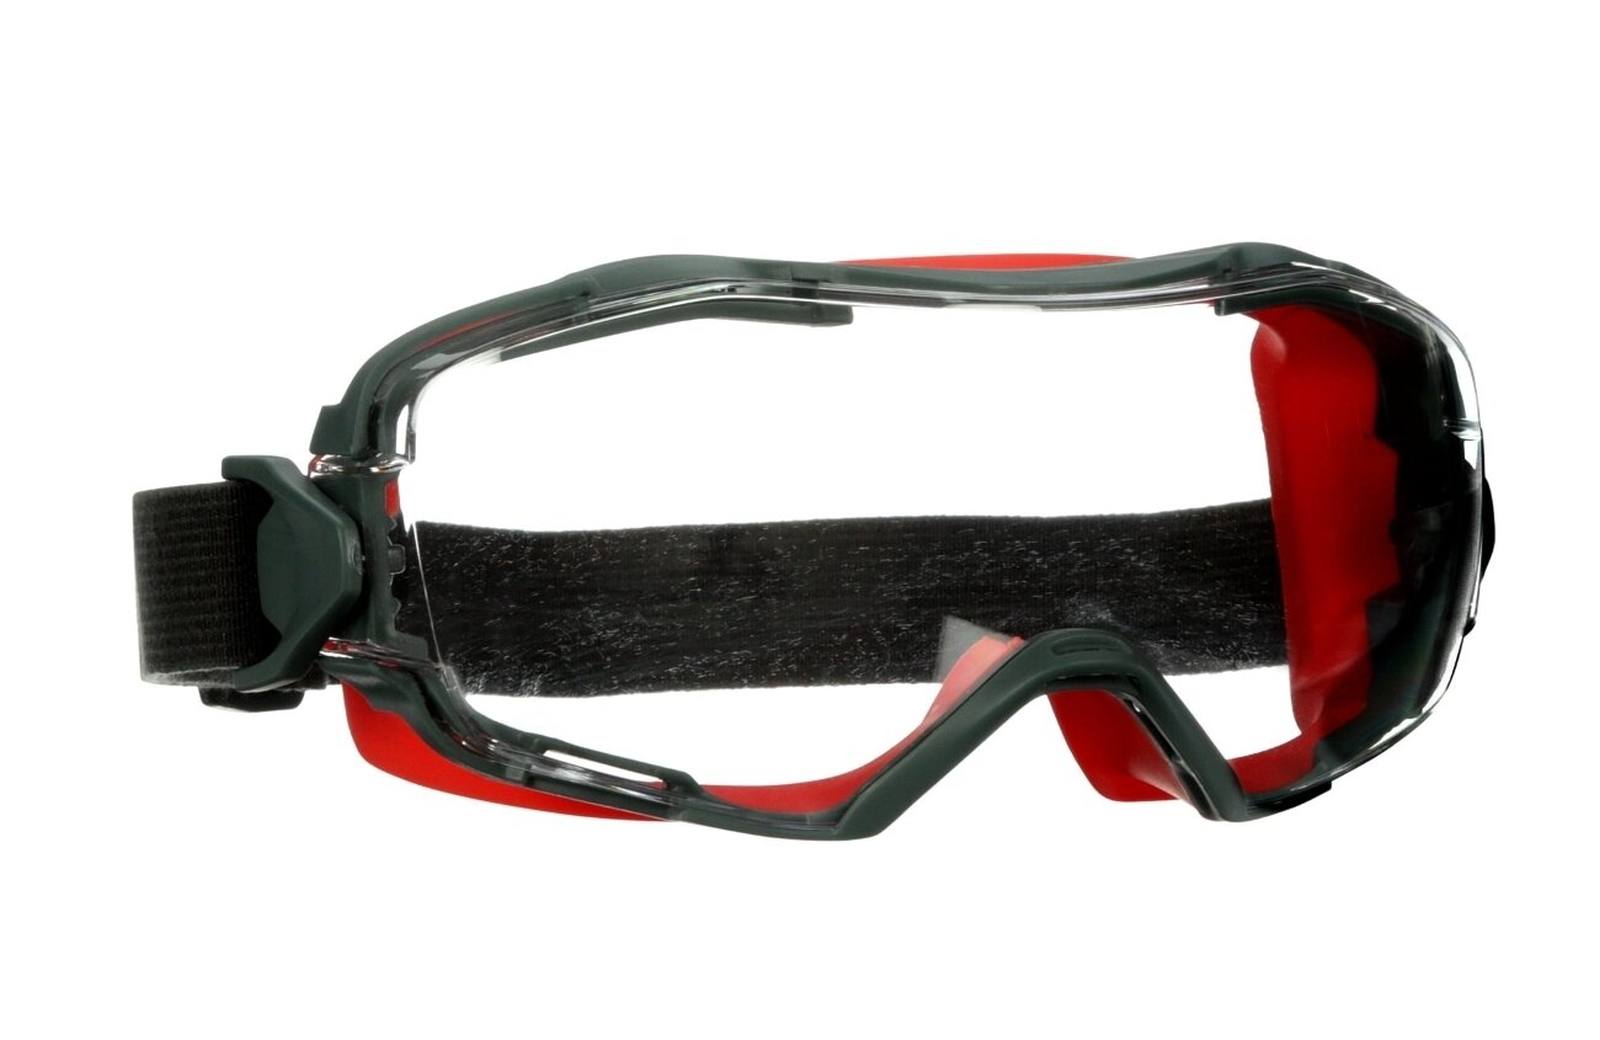 Gafas de visión total 3M GoggleGear 6000, montura roja, revestimiento Scotchgard antivaho/antirayaduras (K